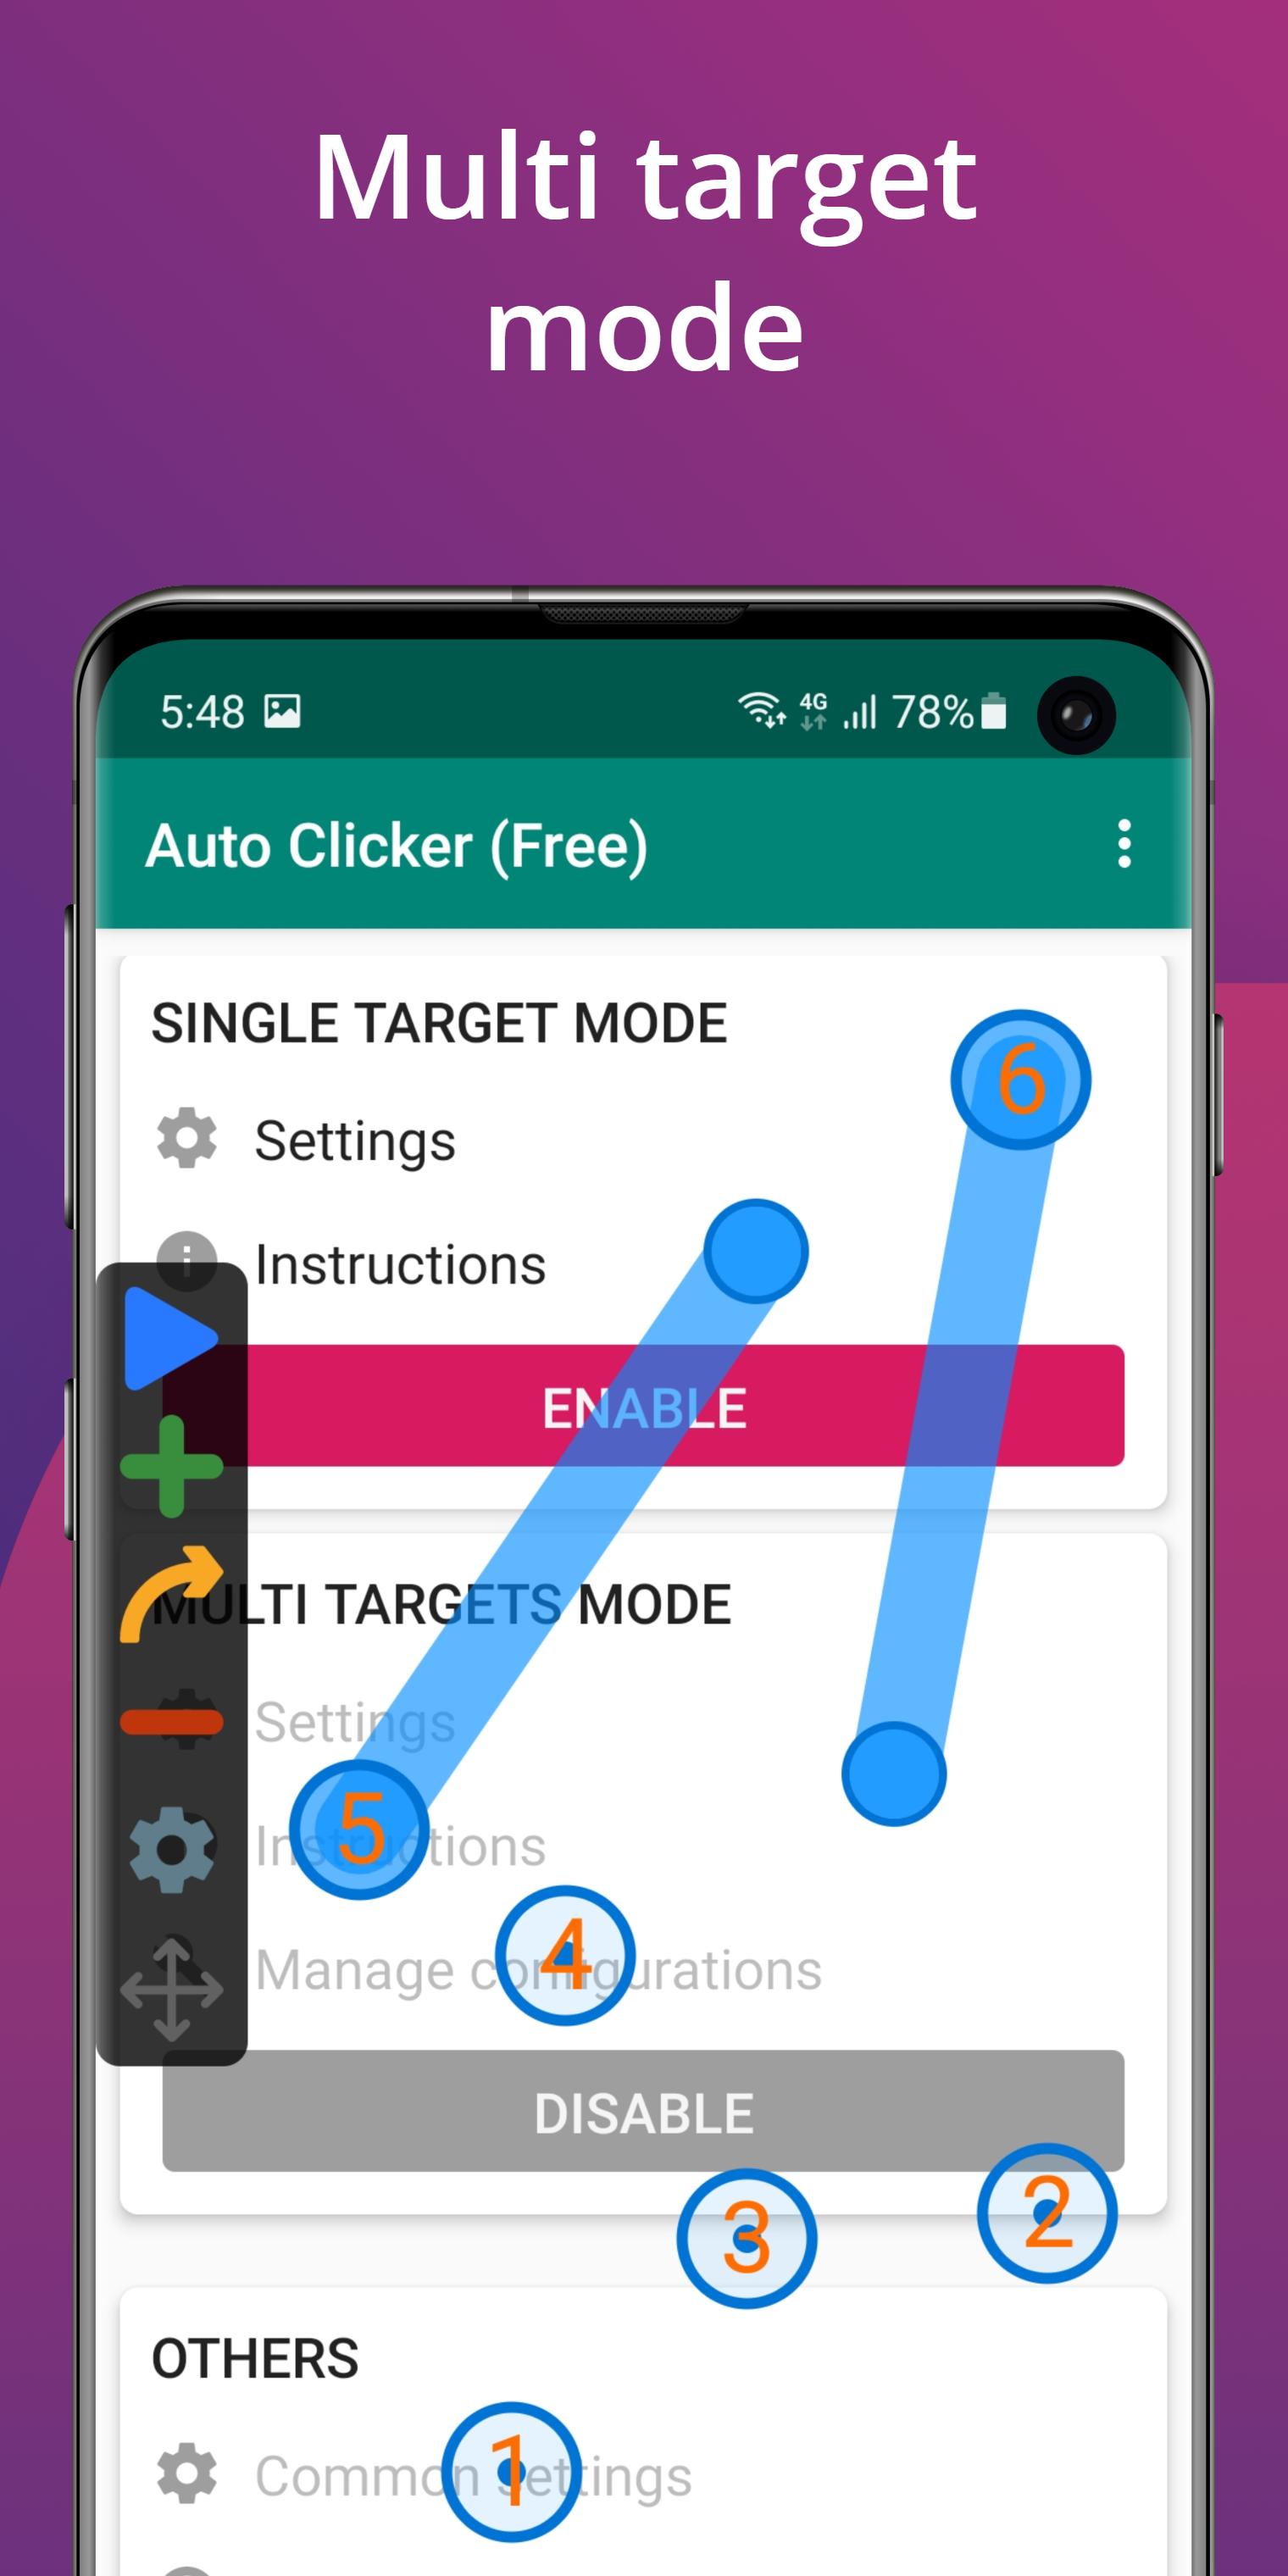 Automatic Clicker para Android - Baixe o APK na Uptodown